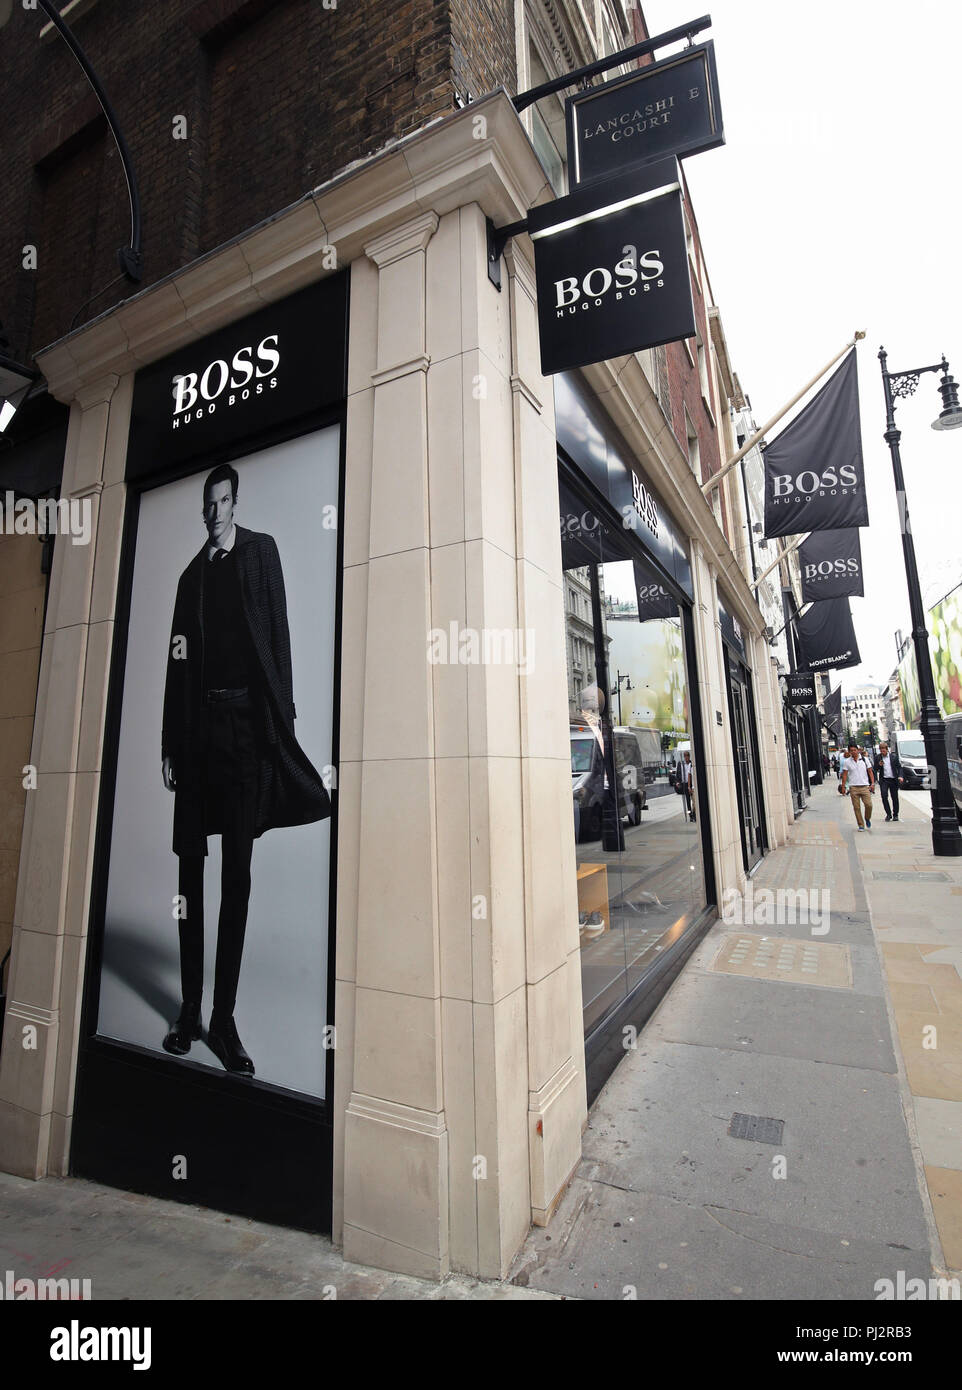 boss new bond street Online shopping 